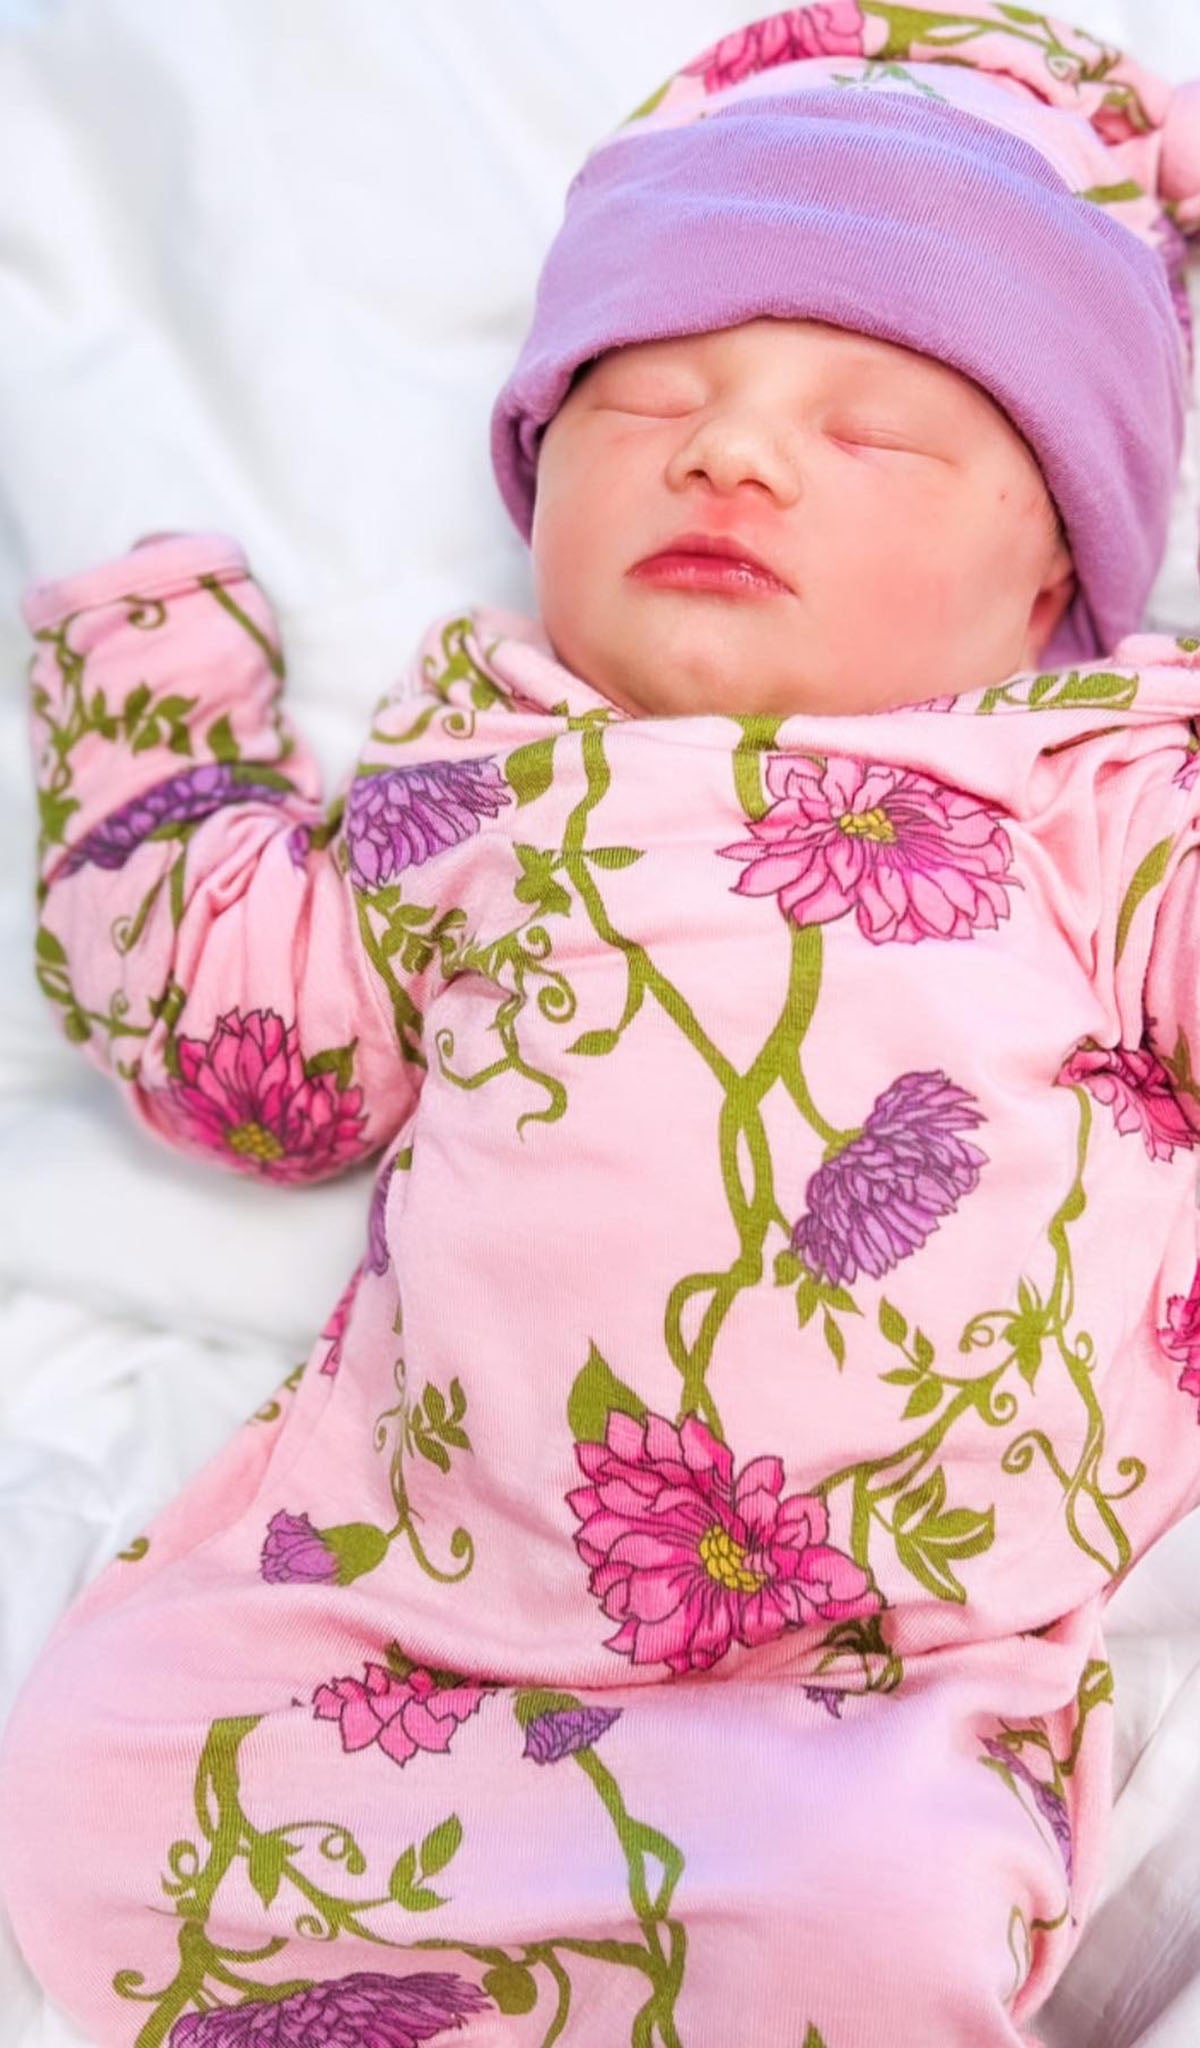 Dahlia Gown 2-Piece worn by sleeping baby.